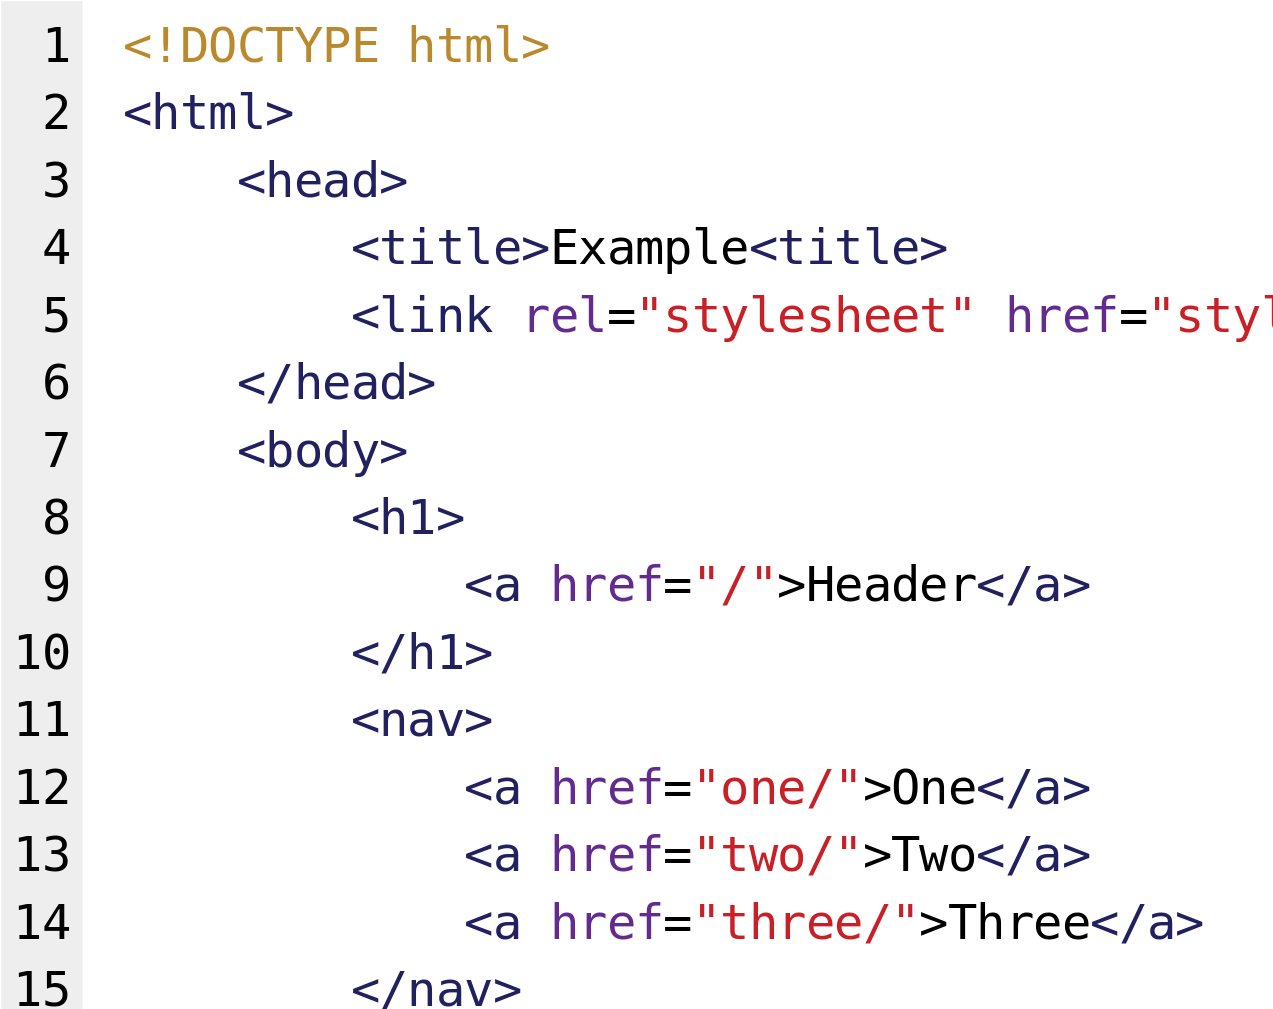 Download Html Source Code Example - Formula De Imagen En Html PNG Image  with No Background 